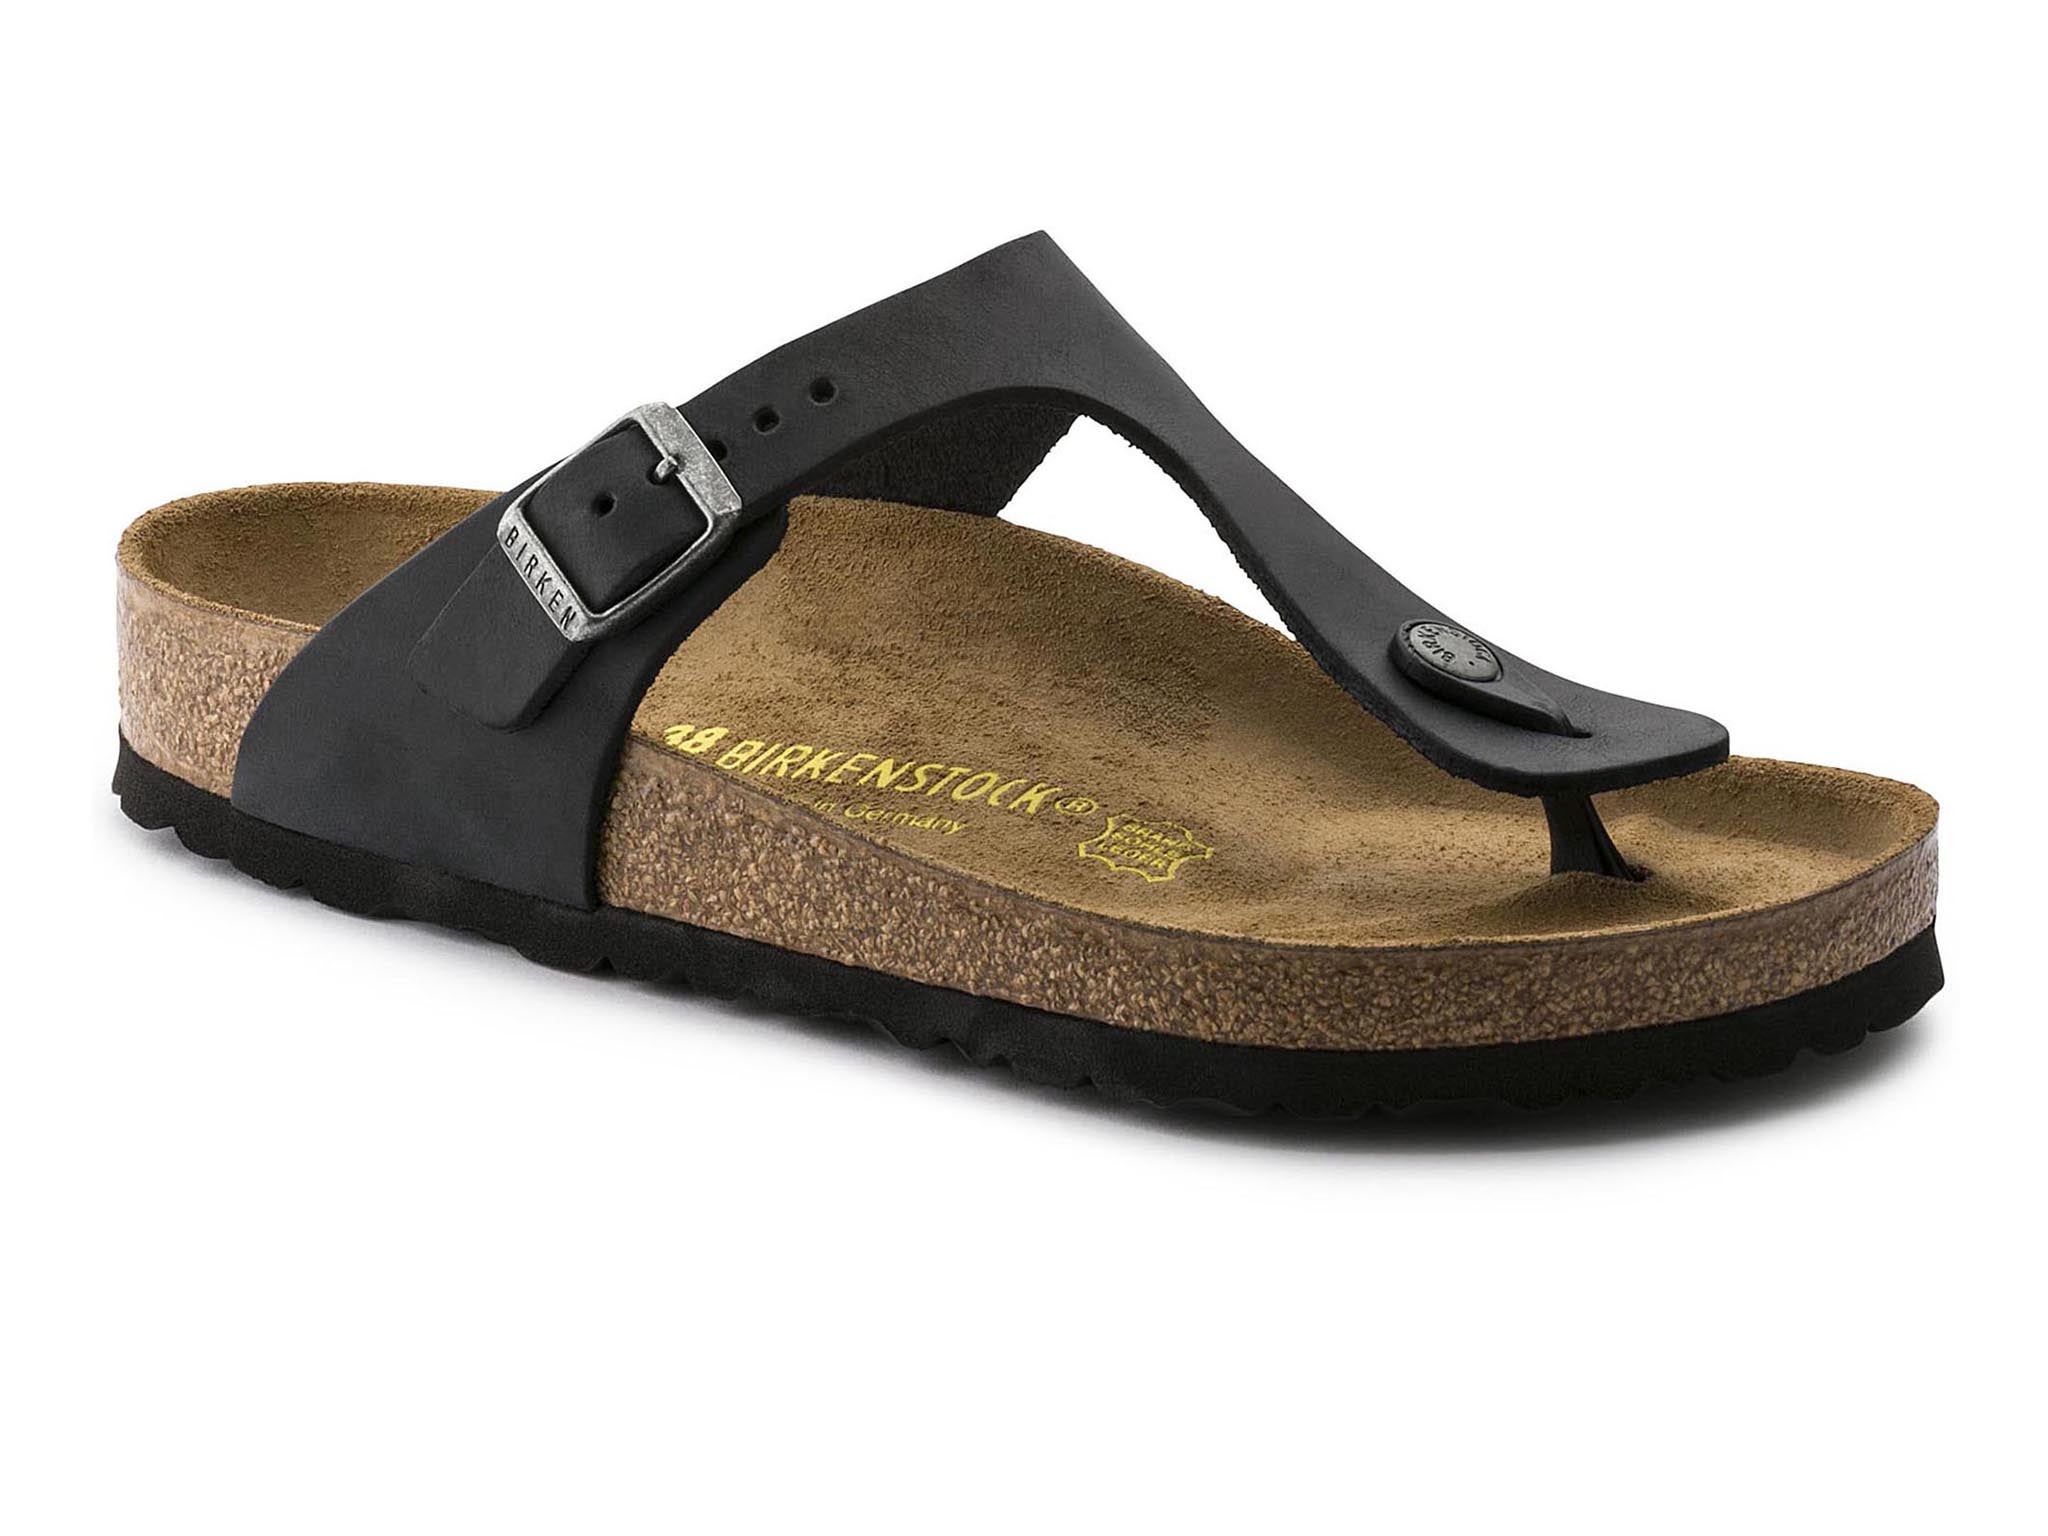 Birkenstock: Which sandals should you buy?